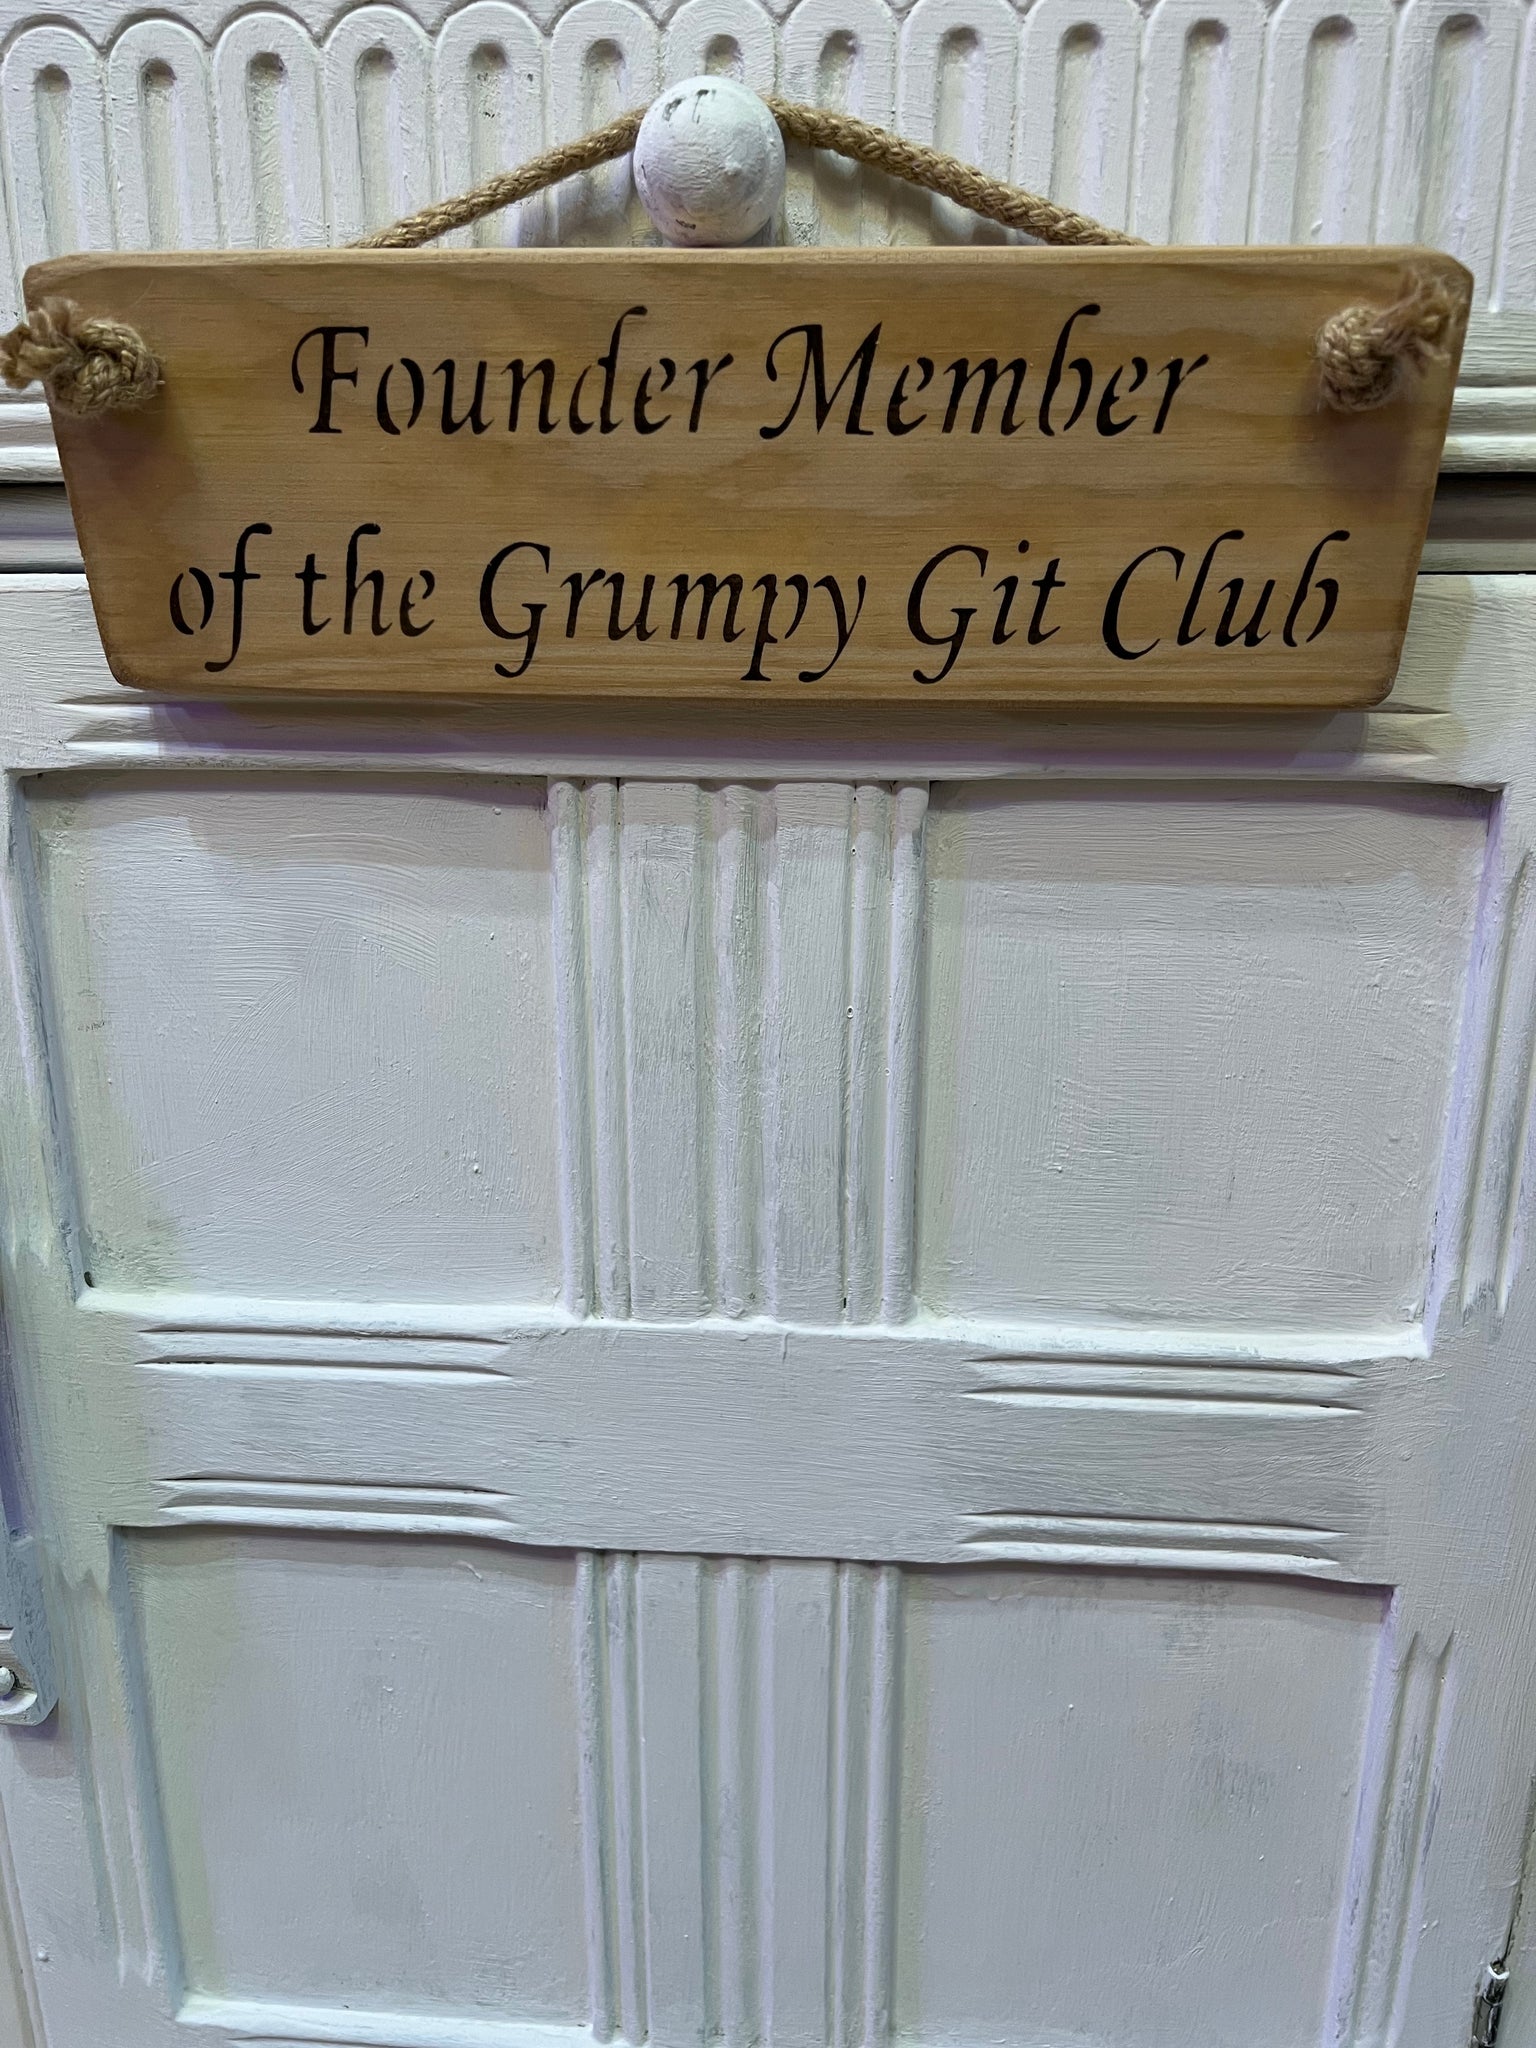 Austin Sloan - Founder member of the Grumpy git club